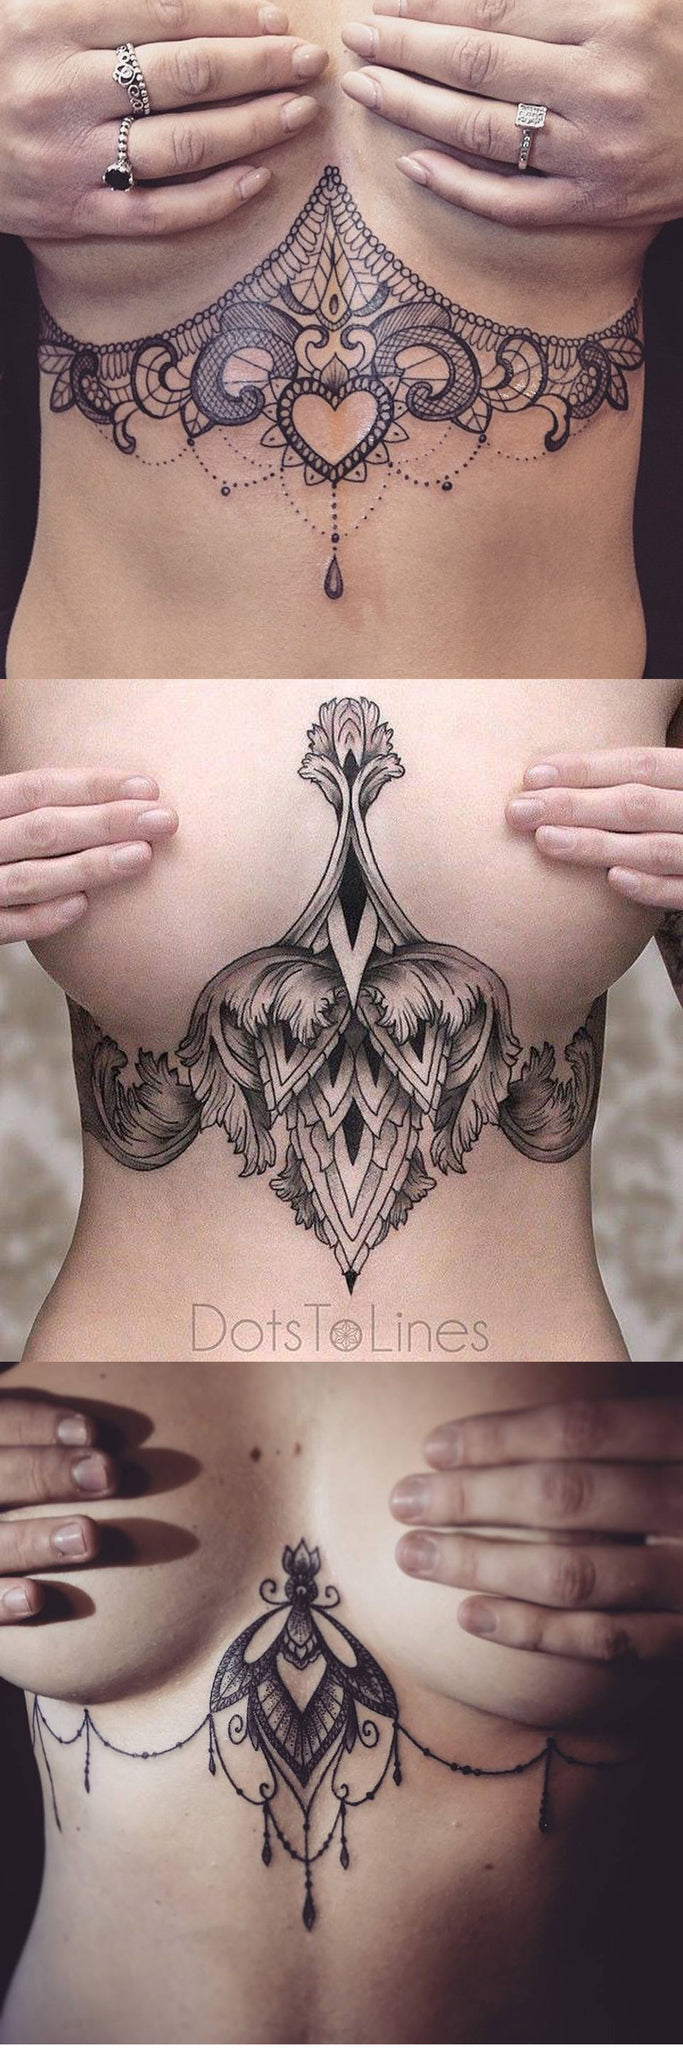 Sternum Tattoo Ideas for Women at MyBodiArt.com - Underboob Mandala Lotus Tat - Black Henna Heart Feather Tatt